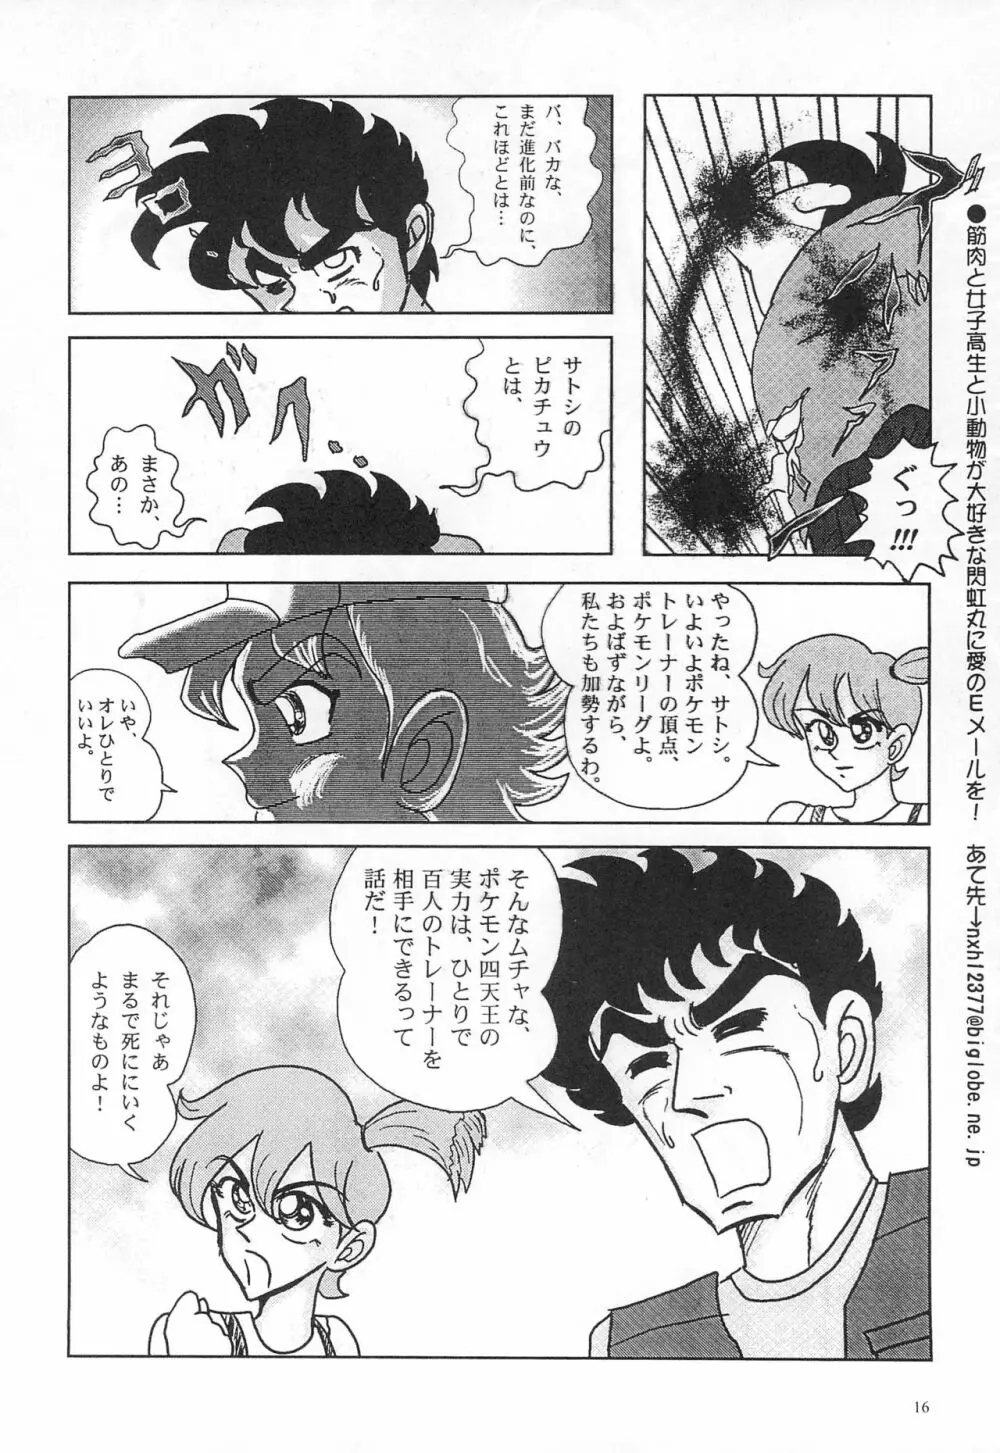 閃虹丸作品集 Vol.1 16ページ